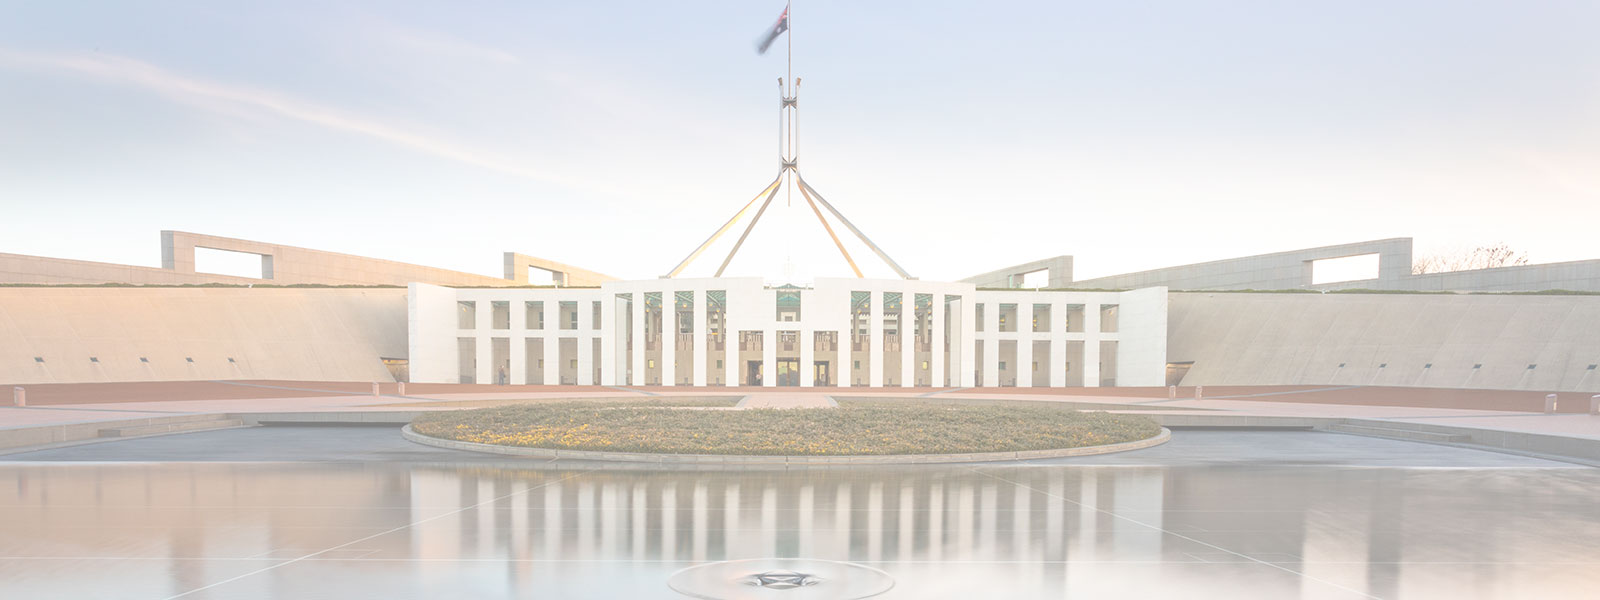 Federal Parliament Building. Canberra. Capital of Australia. Australian Capital Territory. Australia.